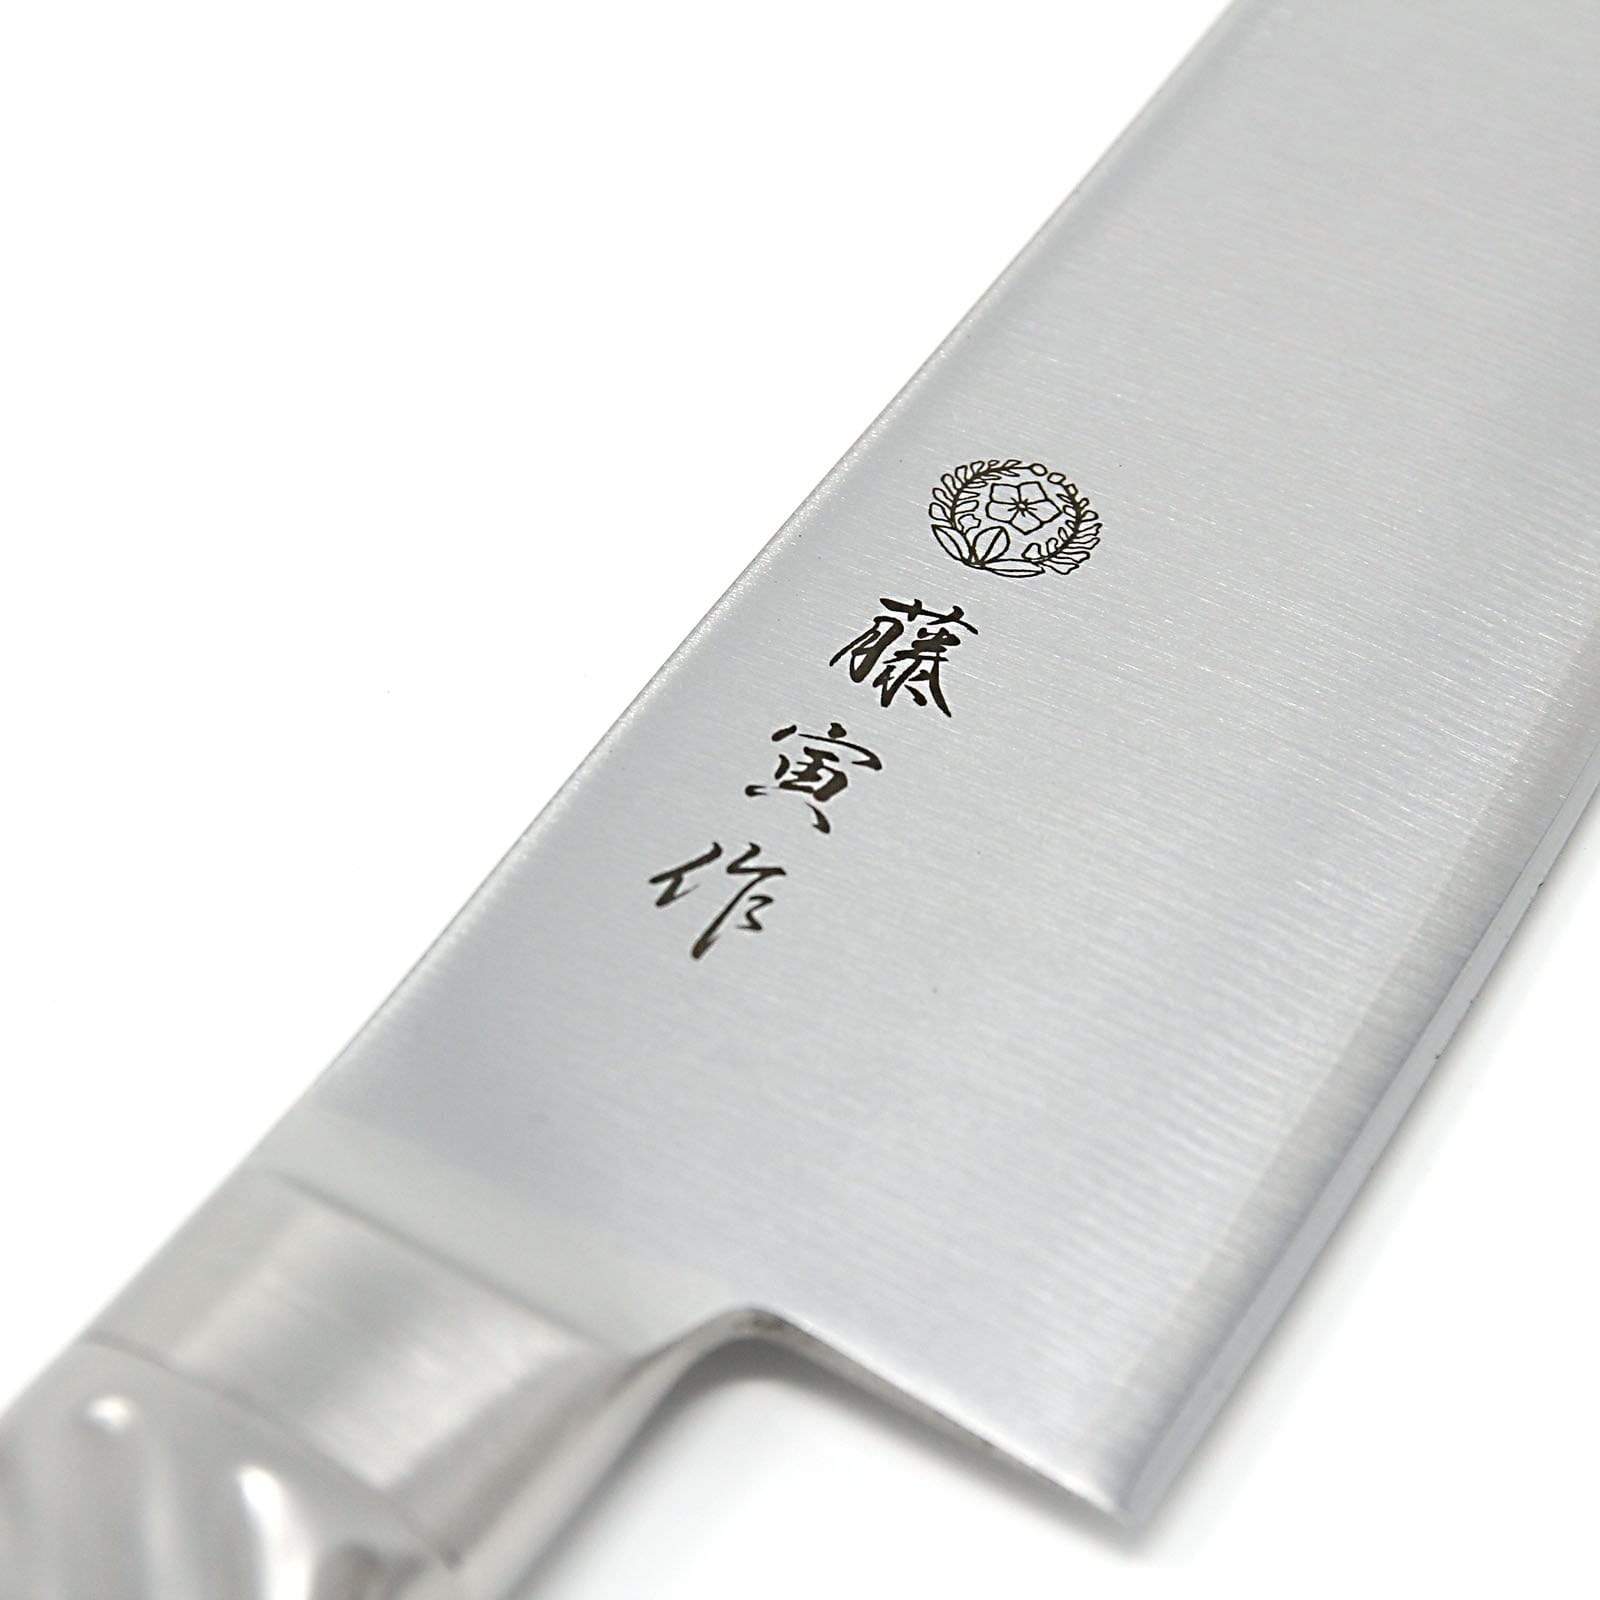 Tojiro Fujitora DP 3-Layer Western Deba Knife (Yo-Deba) with Stainless Steel Handle Deba Knives